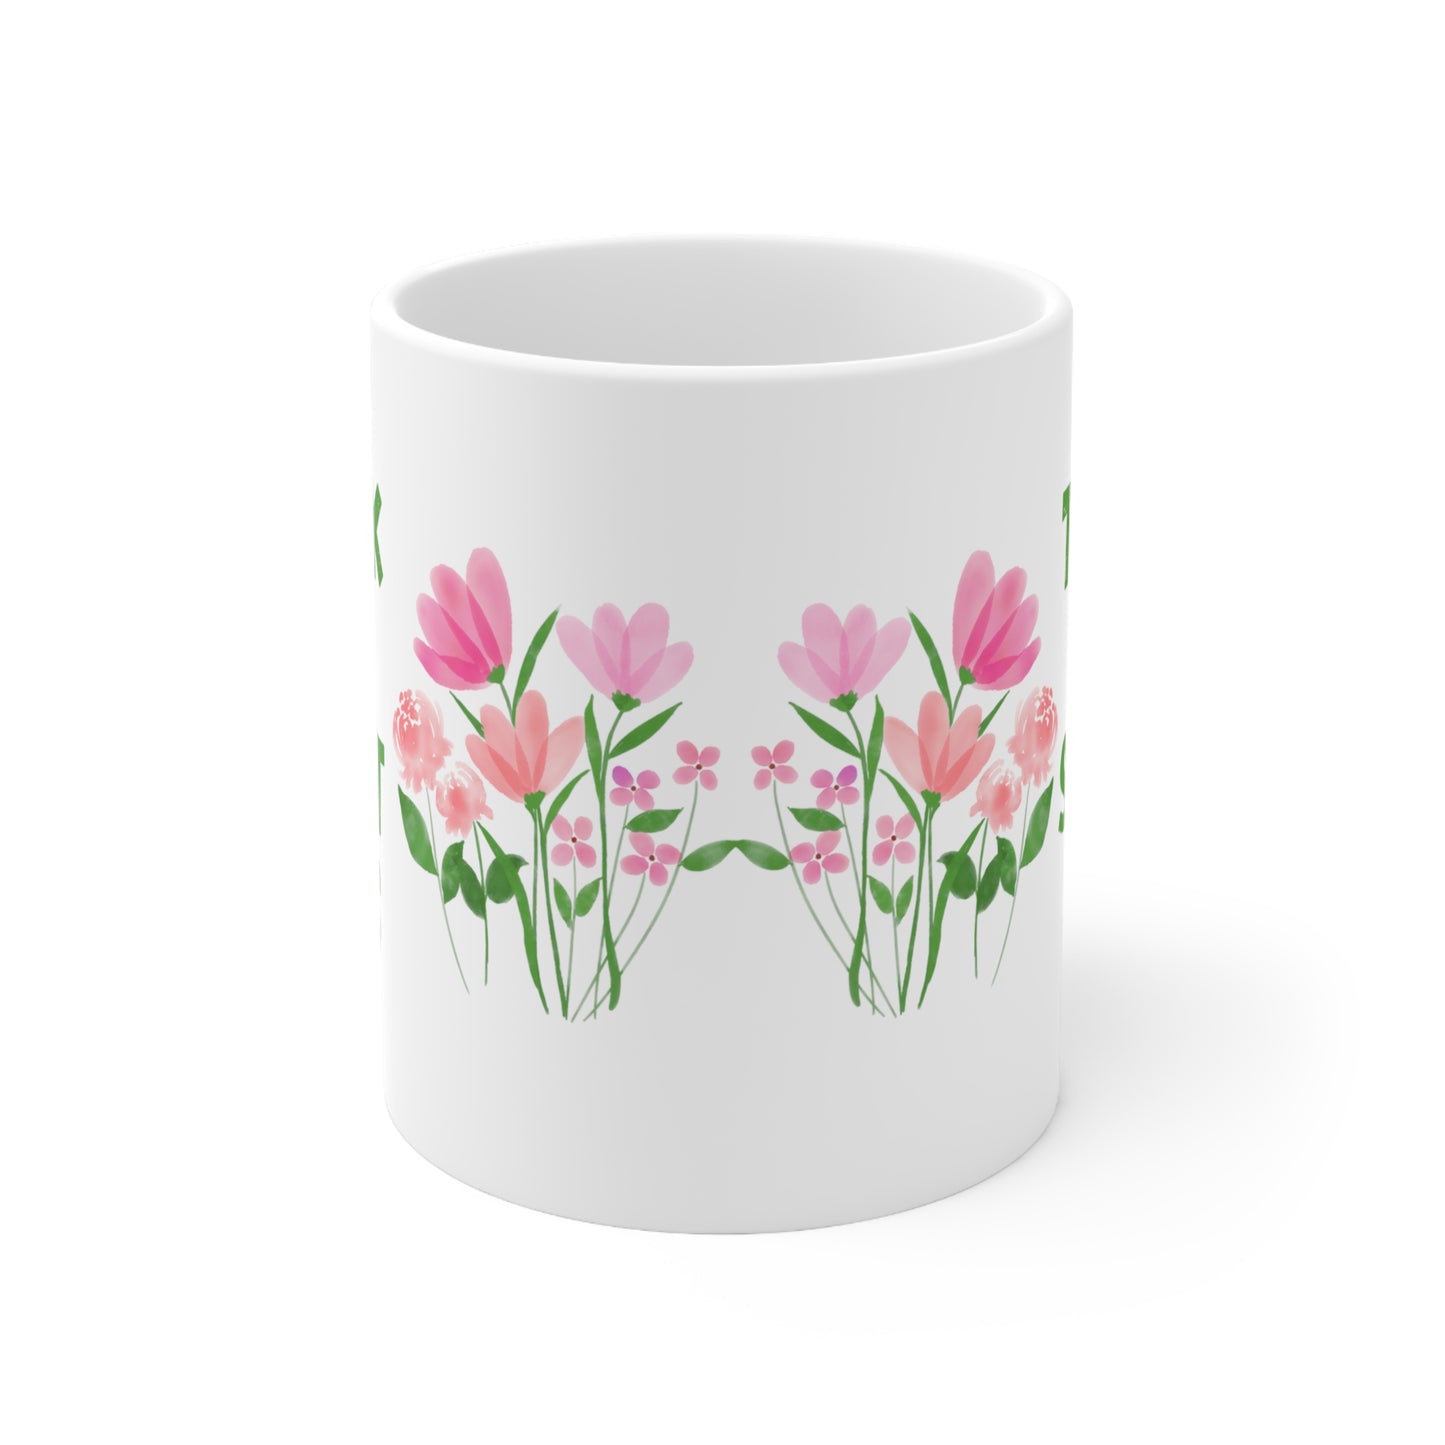 Christian Mug Thank you, Sweet Jesus, White Ceramic Mug 11oz Embellished With Pink Spring Flowers